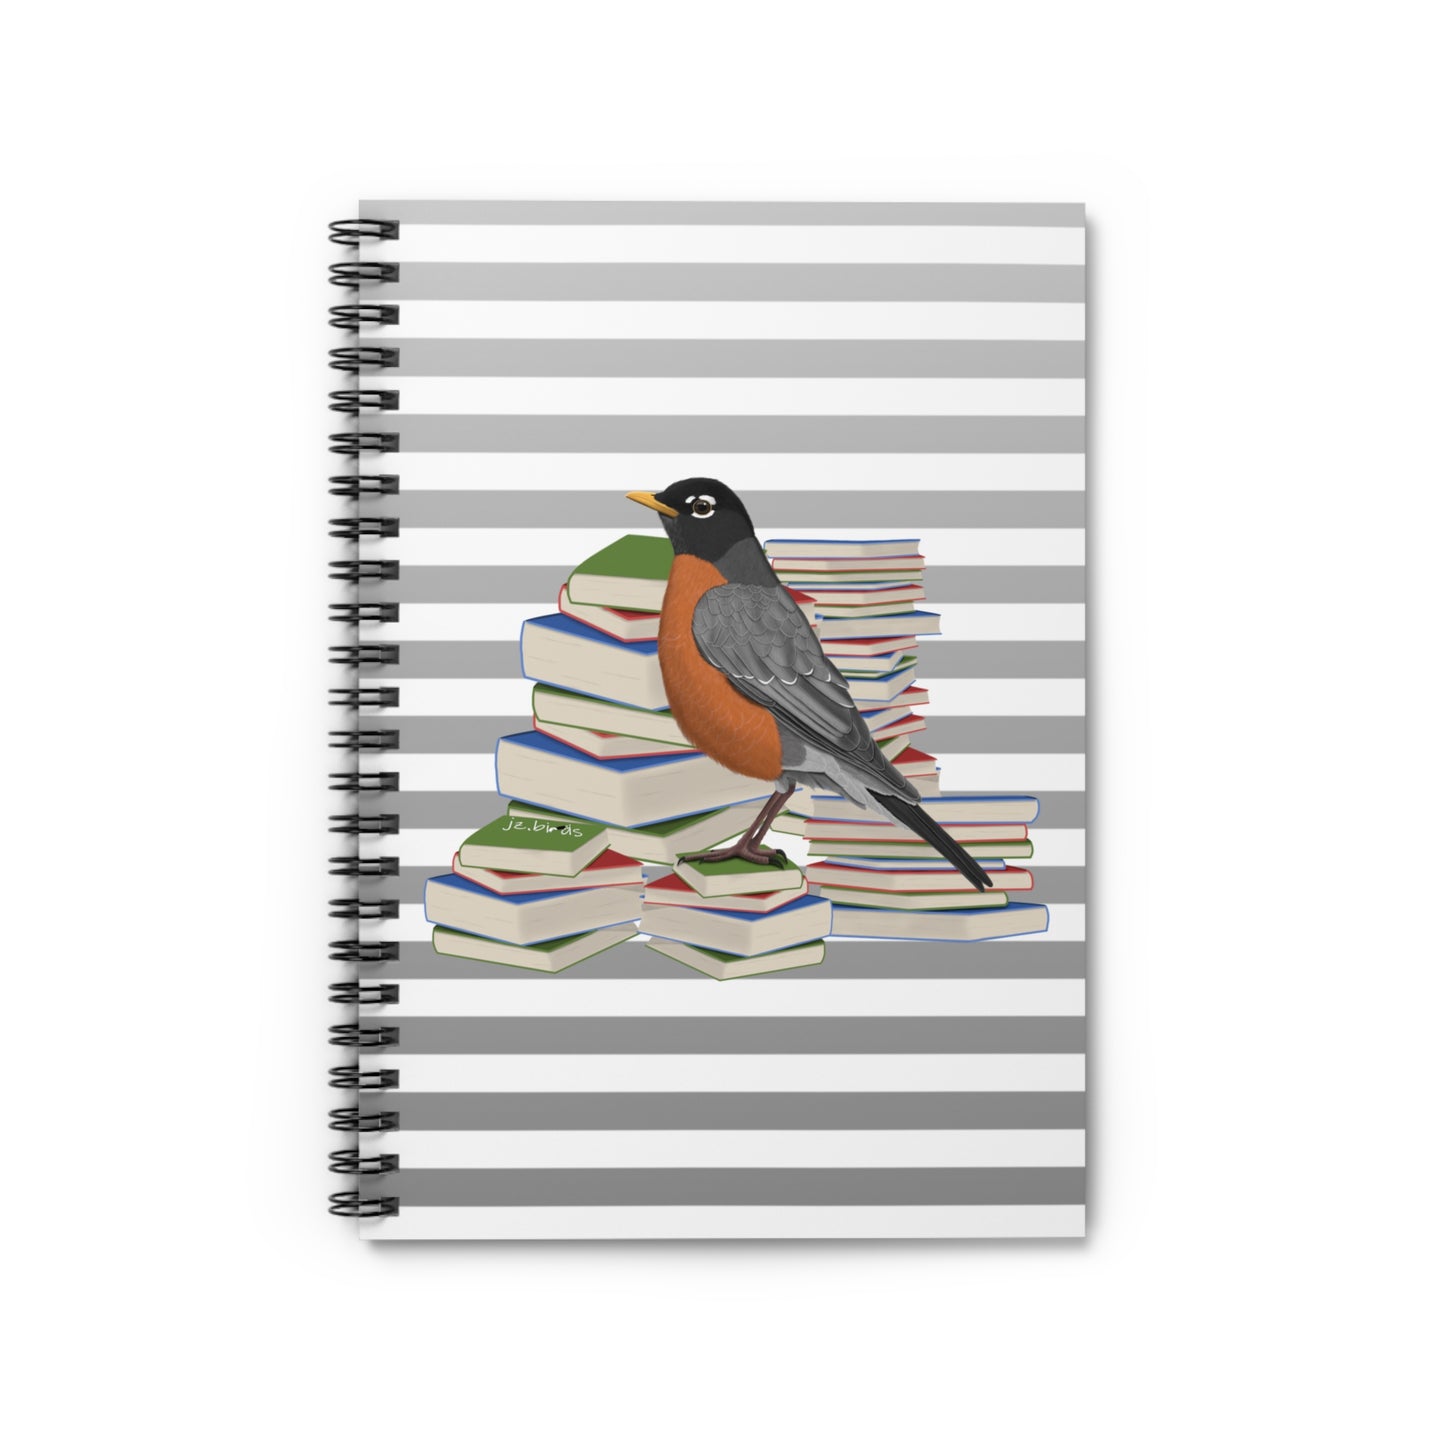 Robin Bird with Books Birdlover Bookworm Spiral Notebook Ruled Line